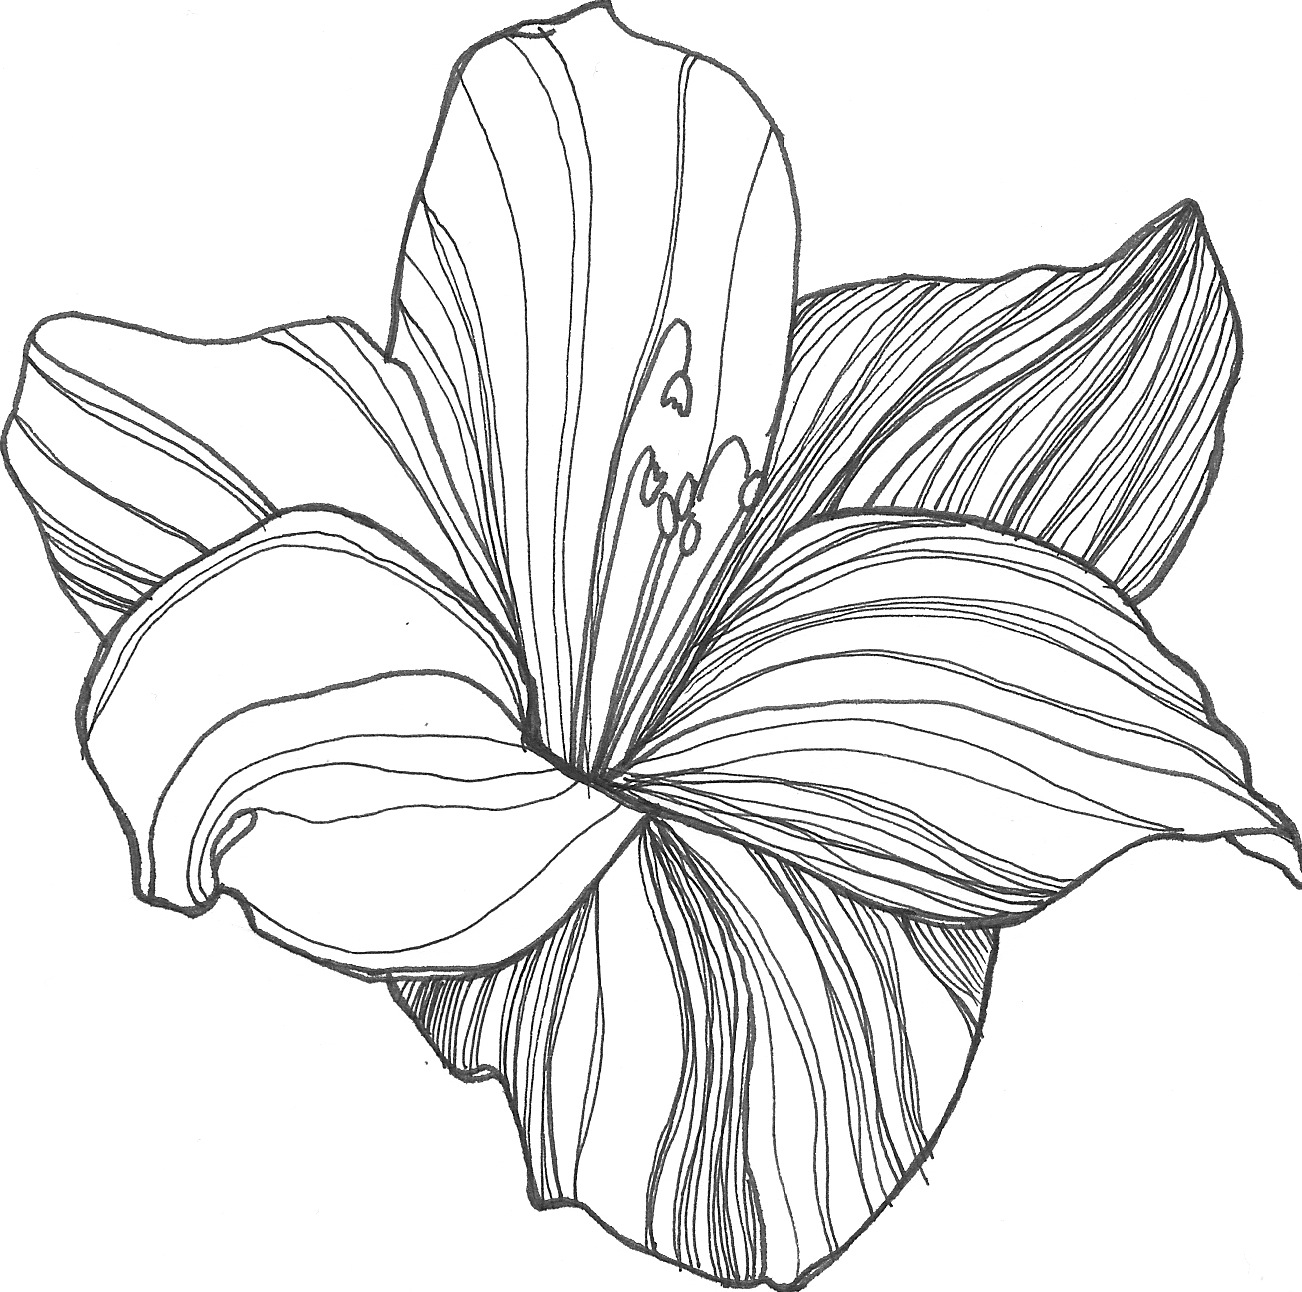 Regular Practice For Tropical Flower Drawings